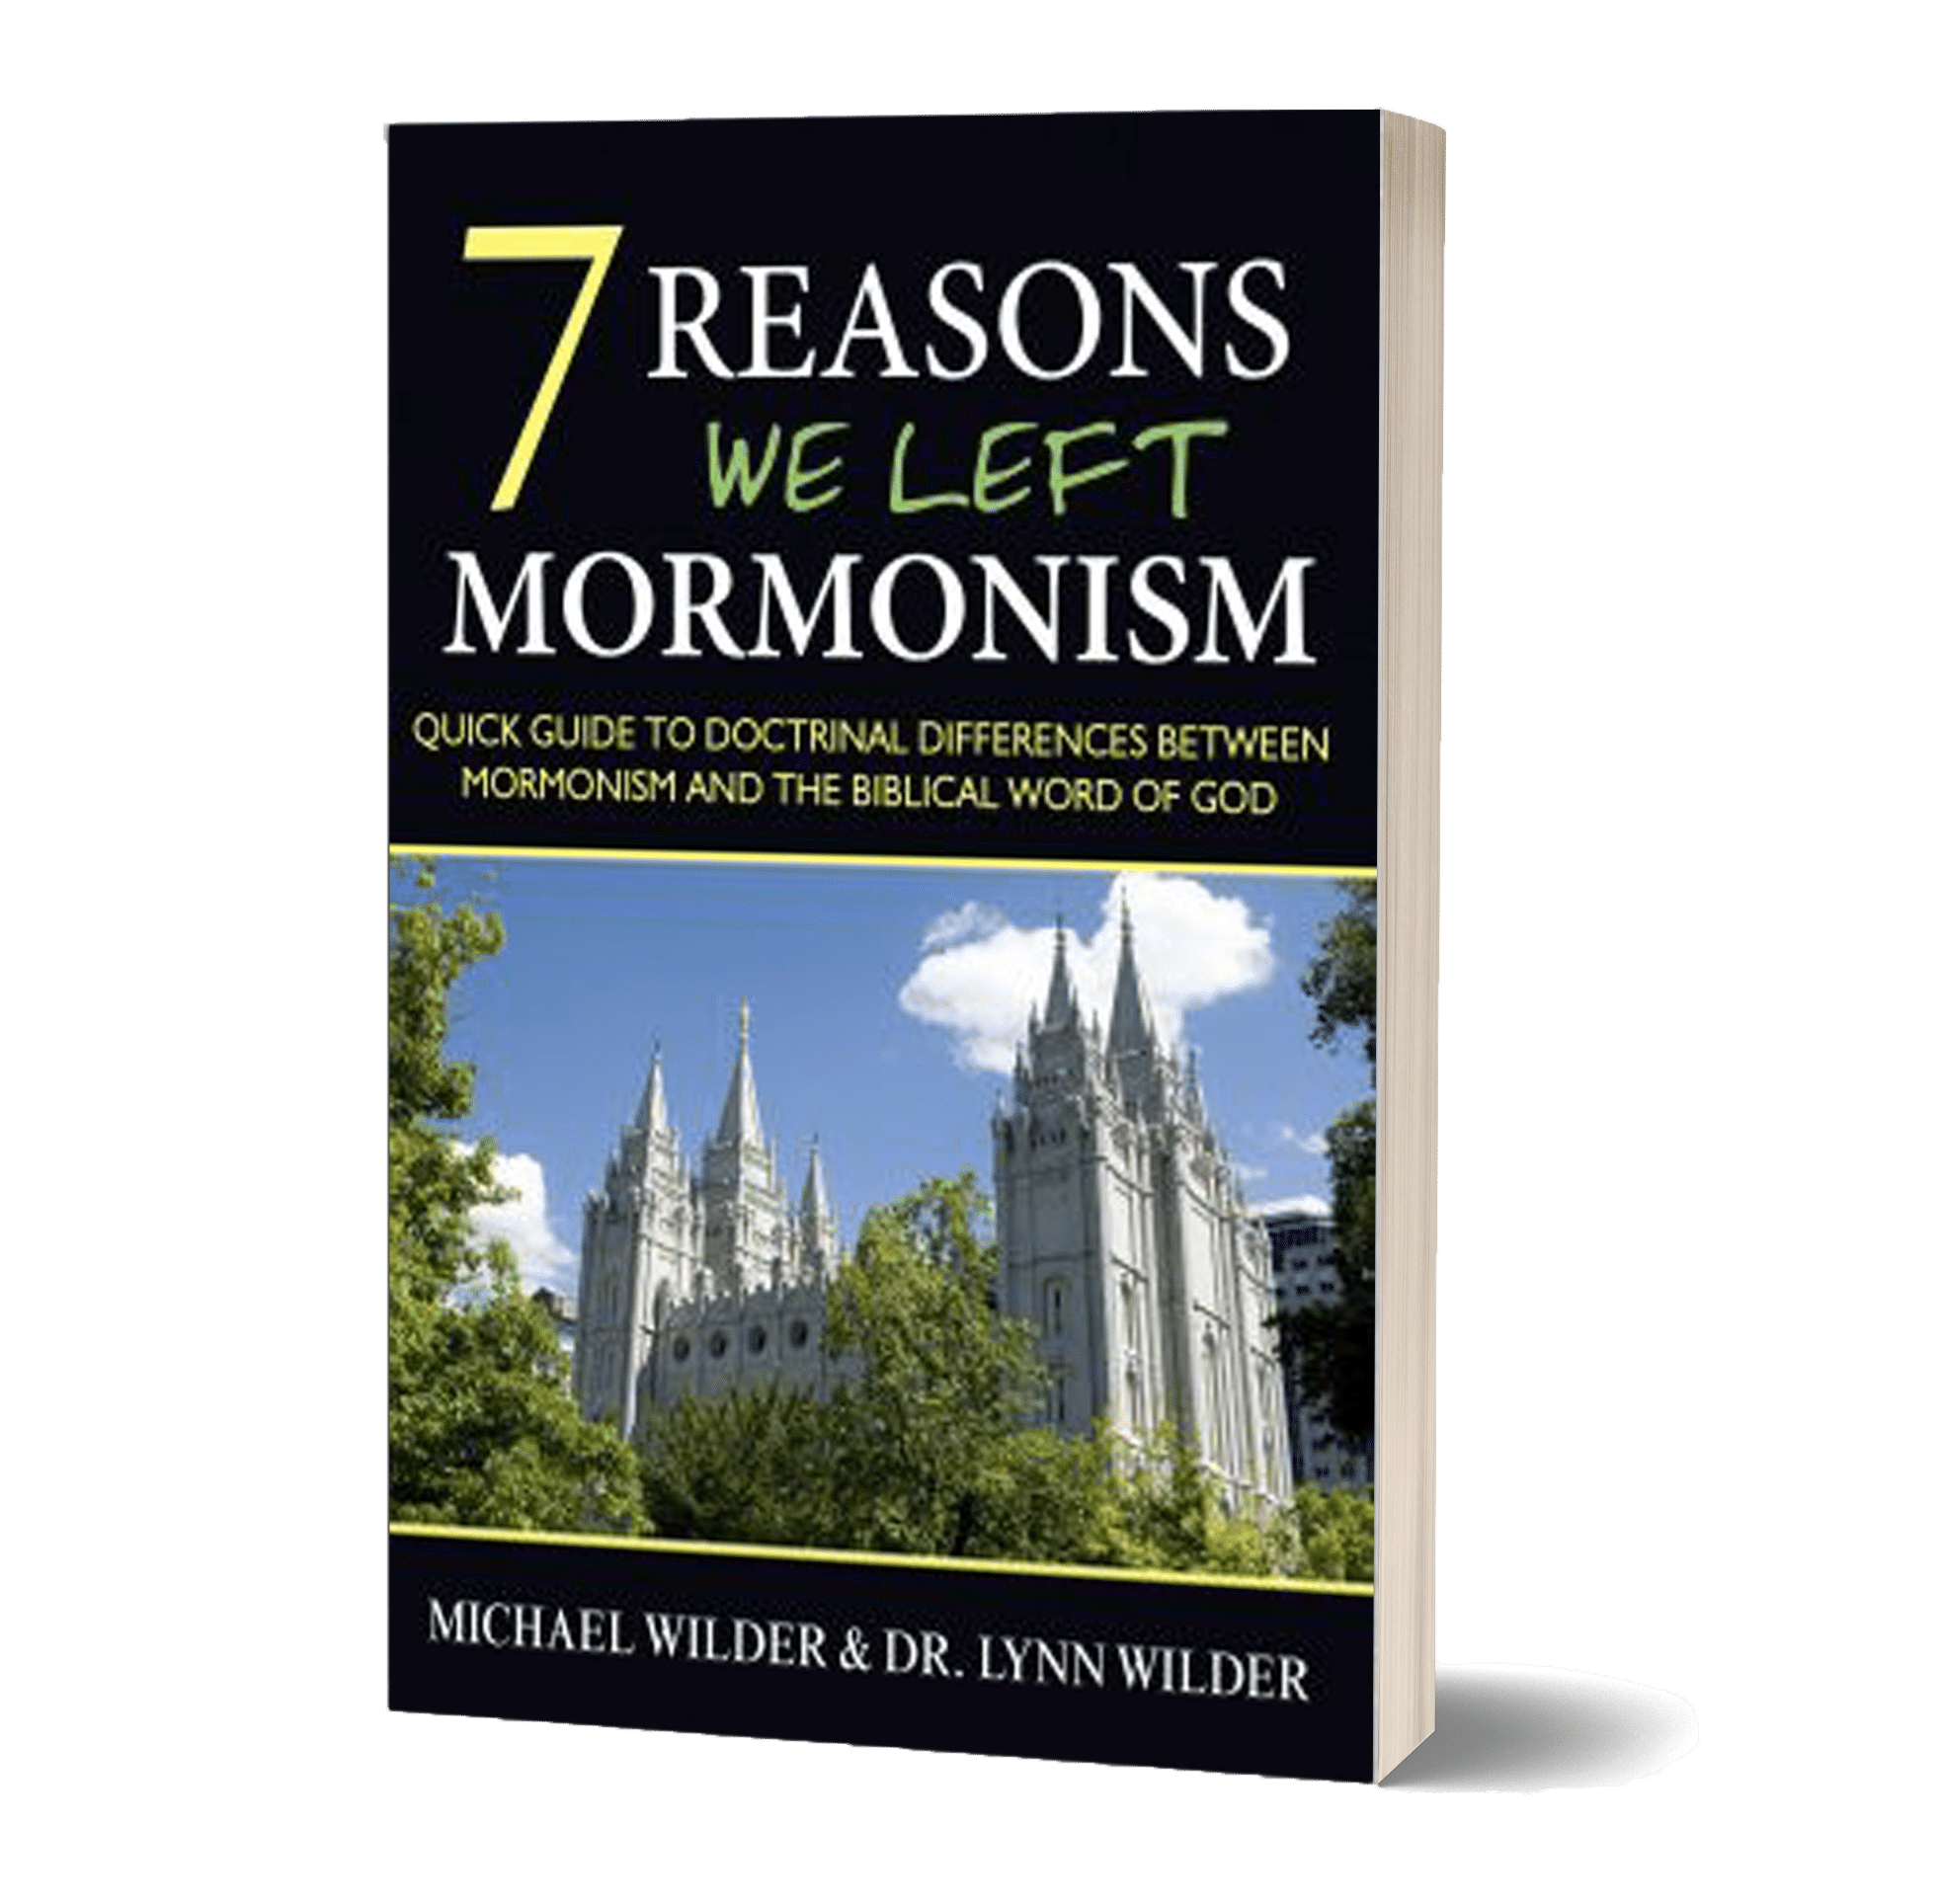 7 reasons we left mormonism